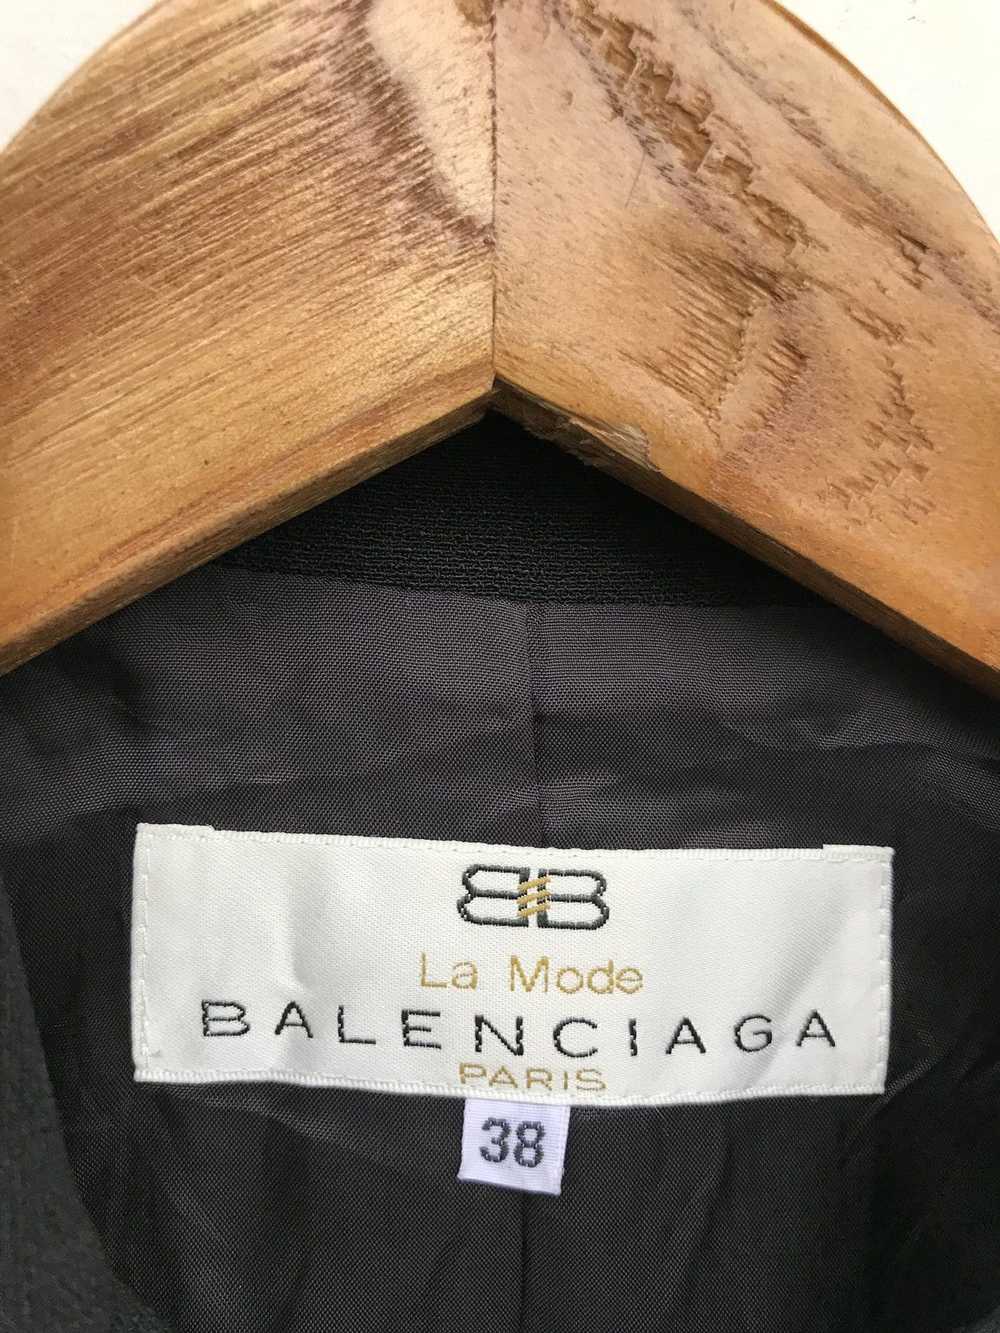 Balenciaga Balenciaga Black Coat Jacket - image 3